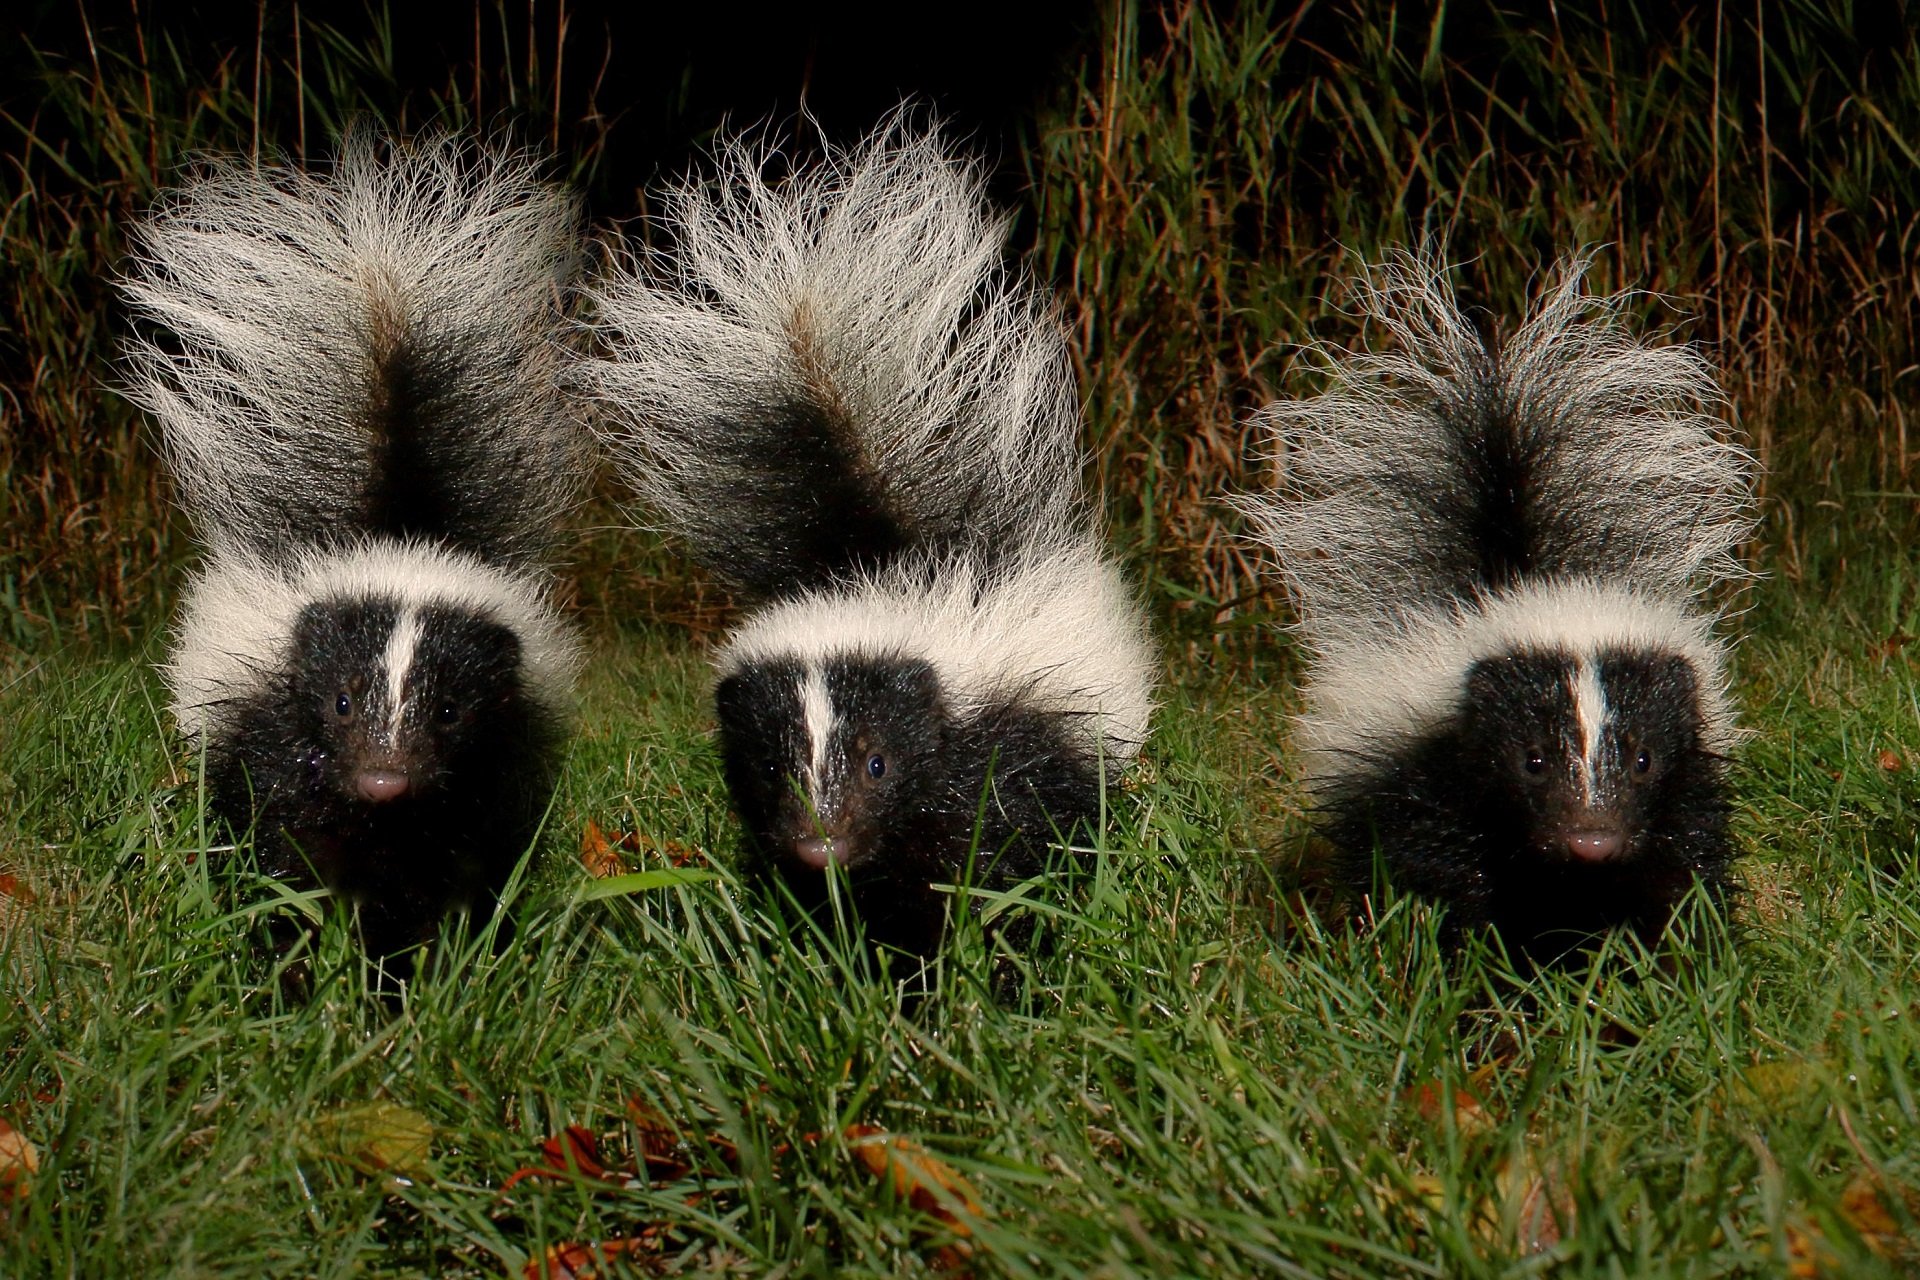 Three skunks amble through the grass.